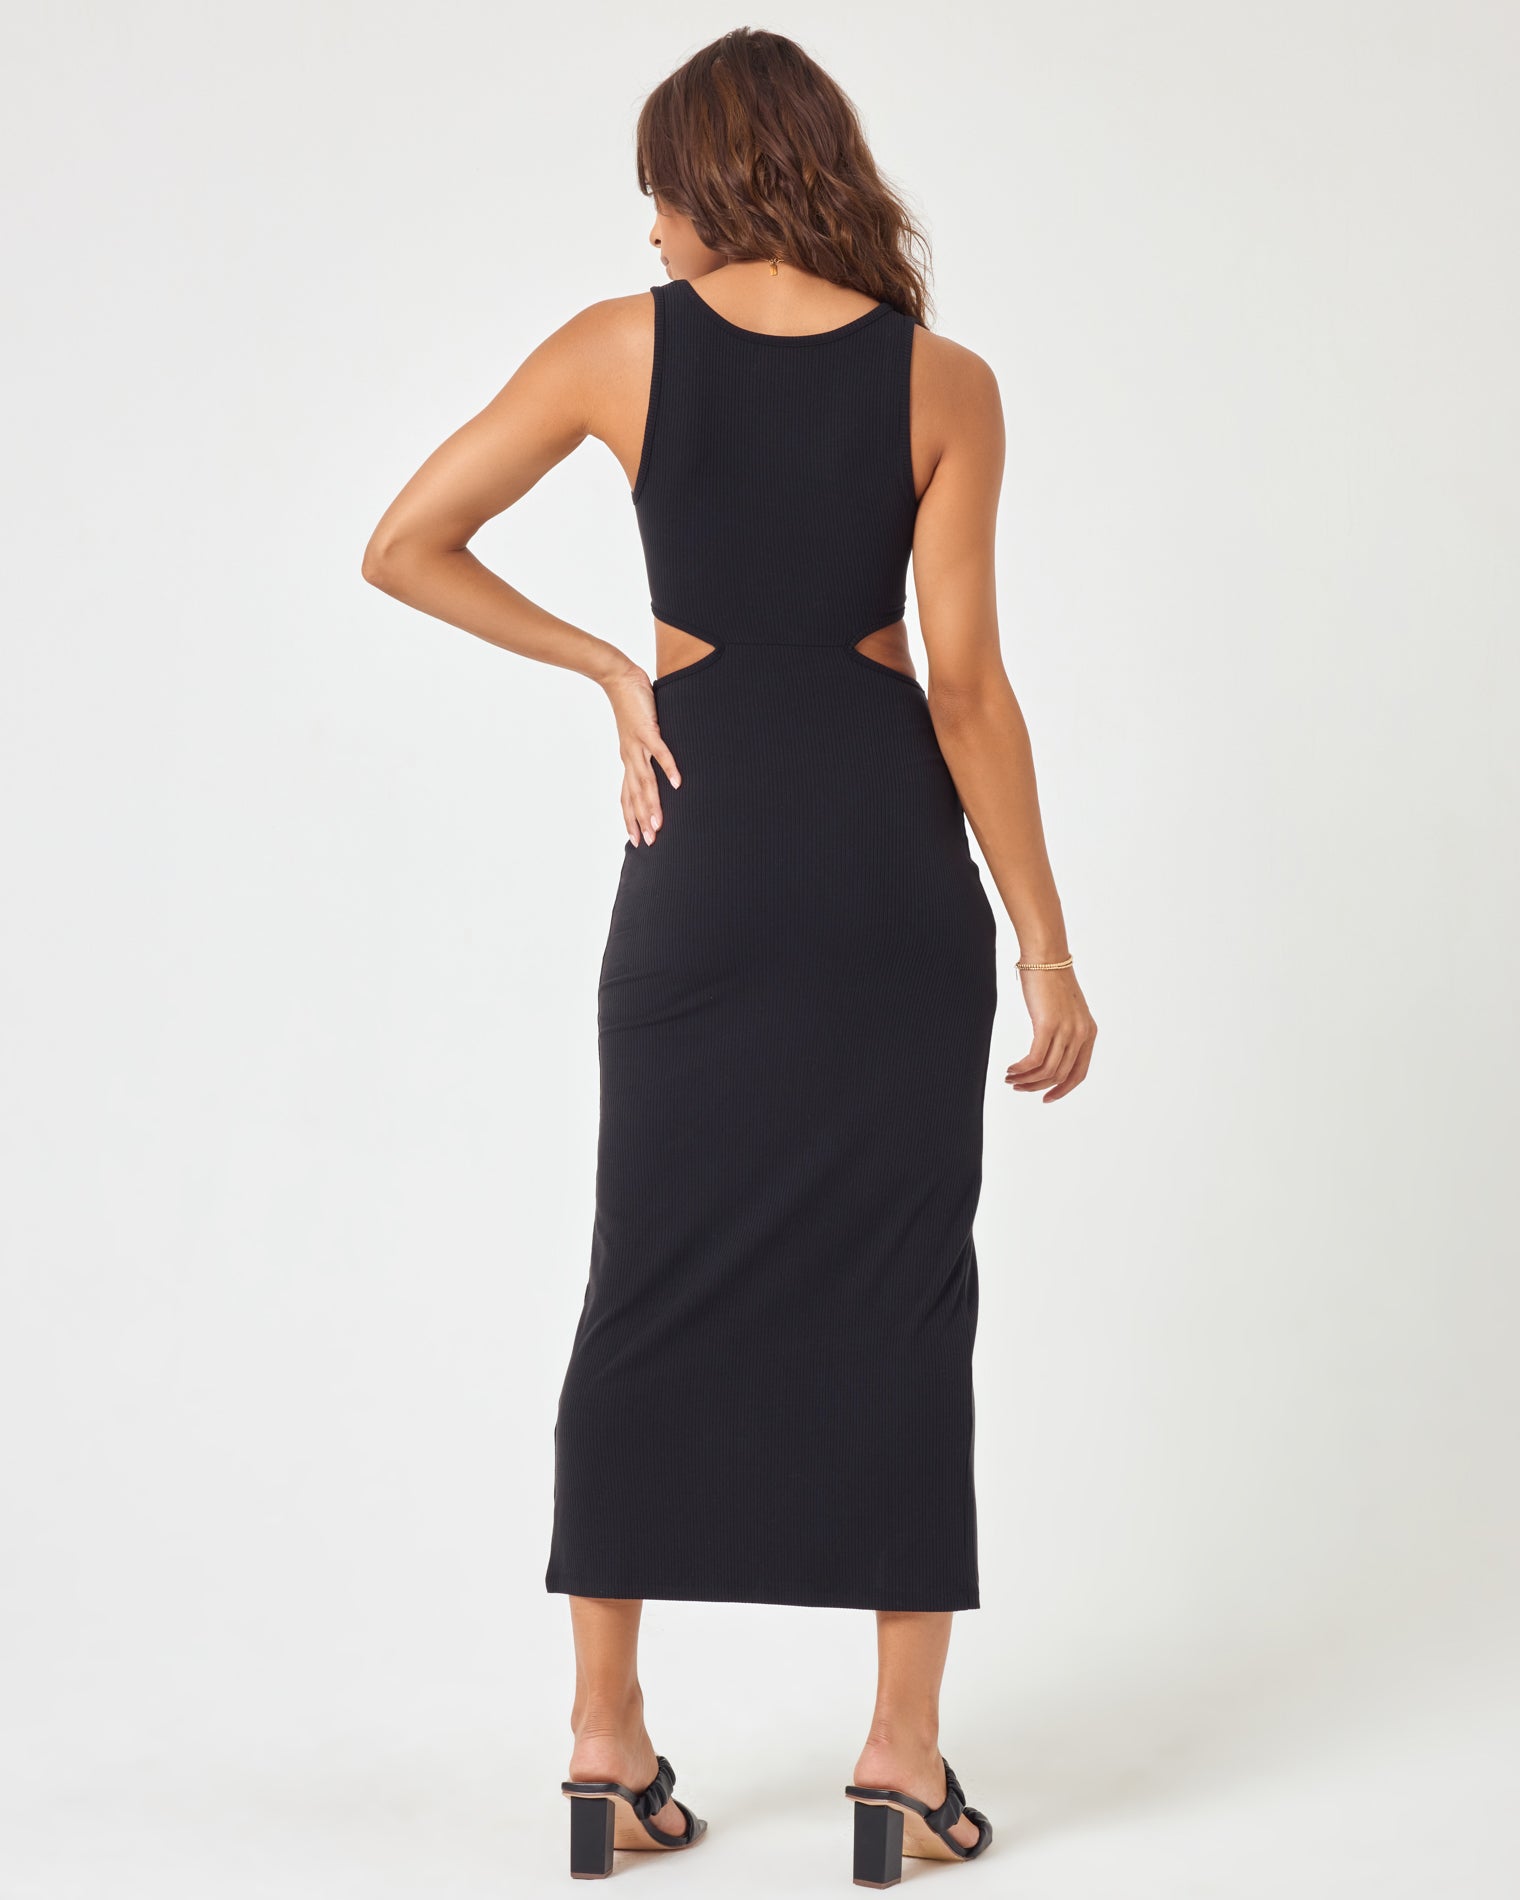 Skyler Dress - Black Black | Model: Natalie (size: S)